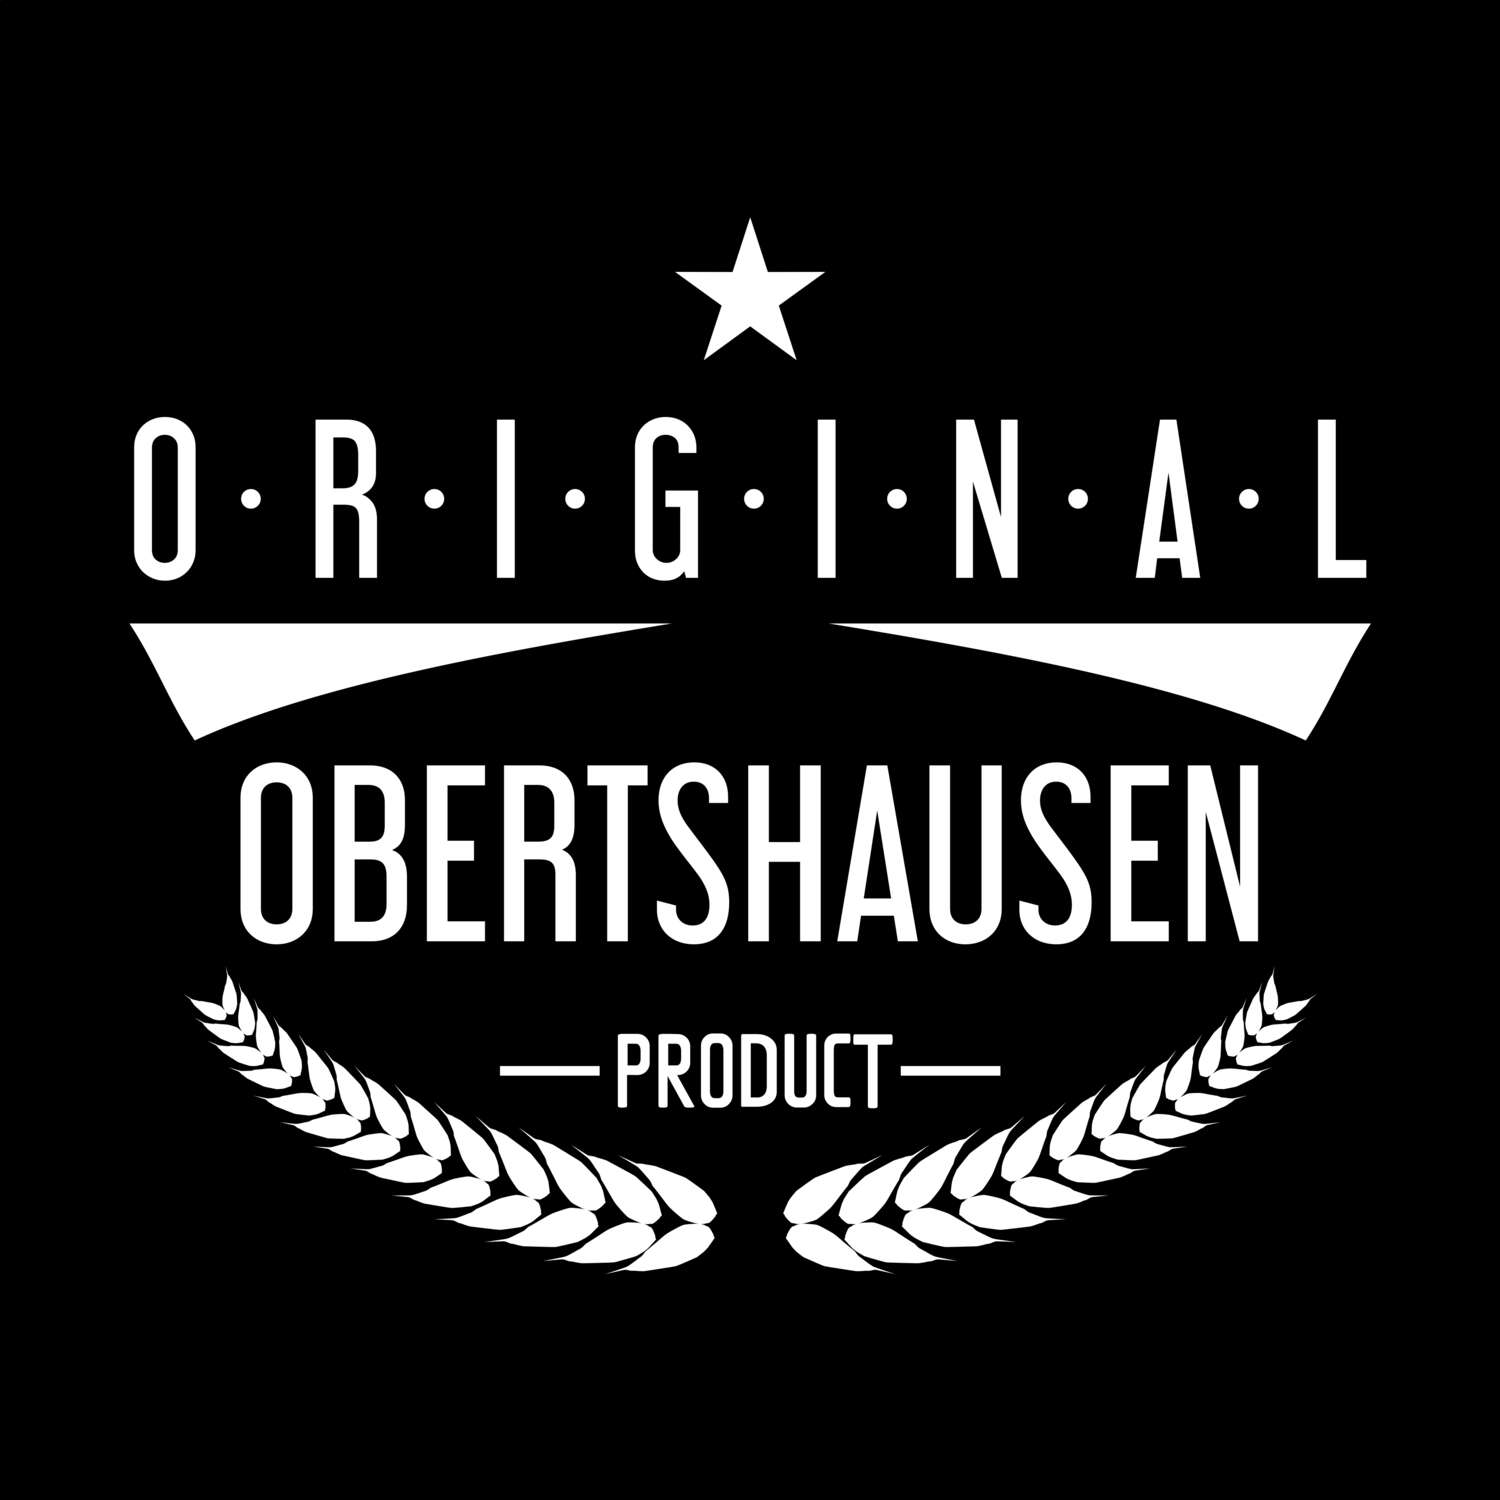 Obertshausen T-Shirt »Original Product«